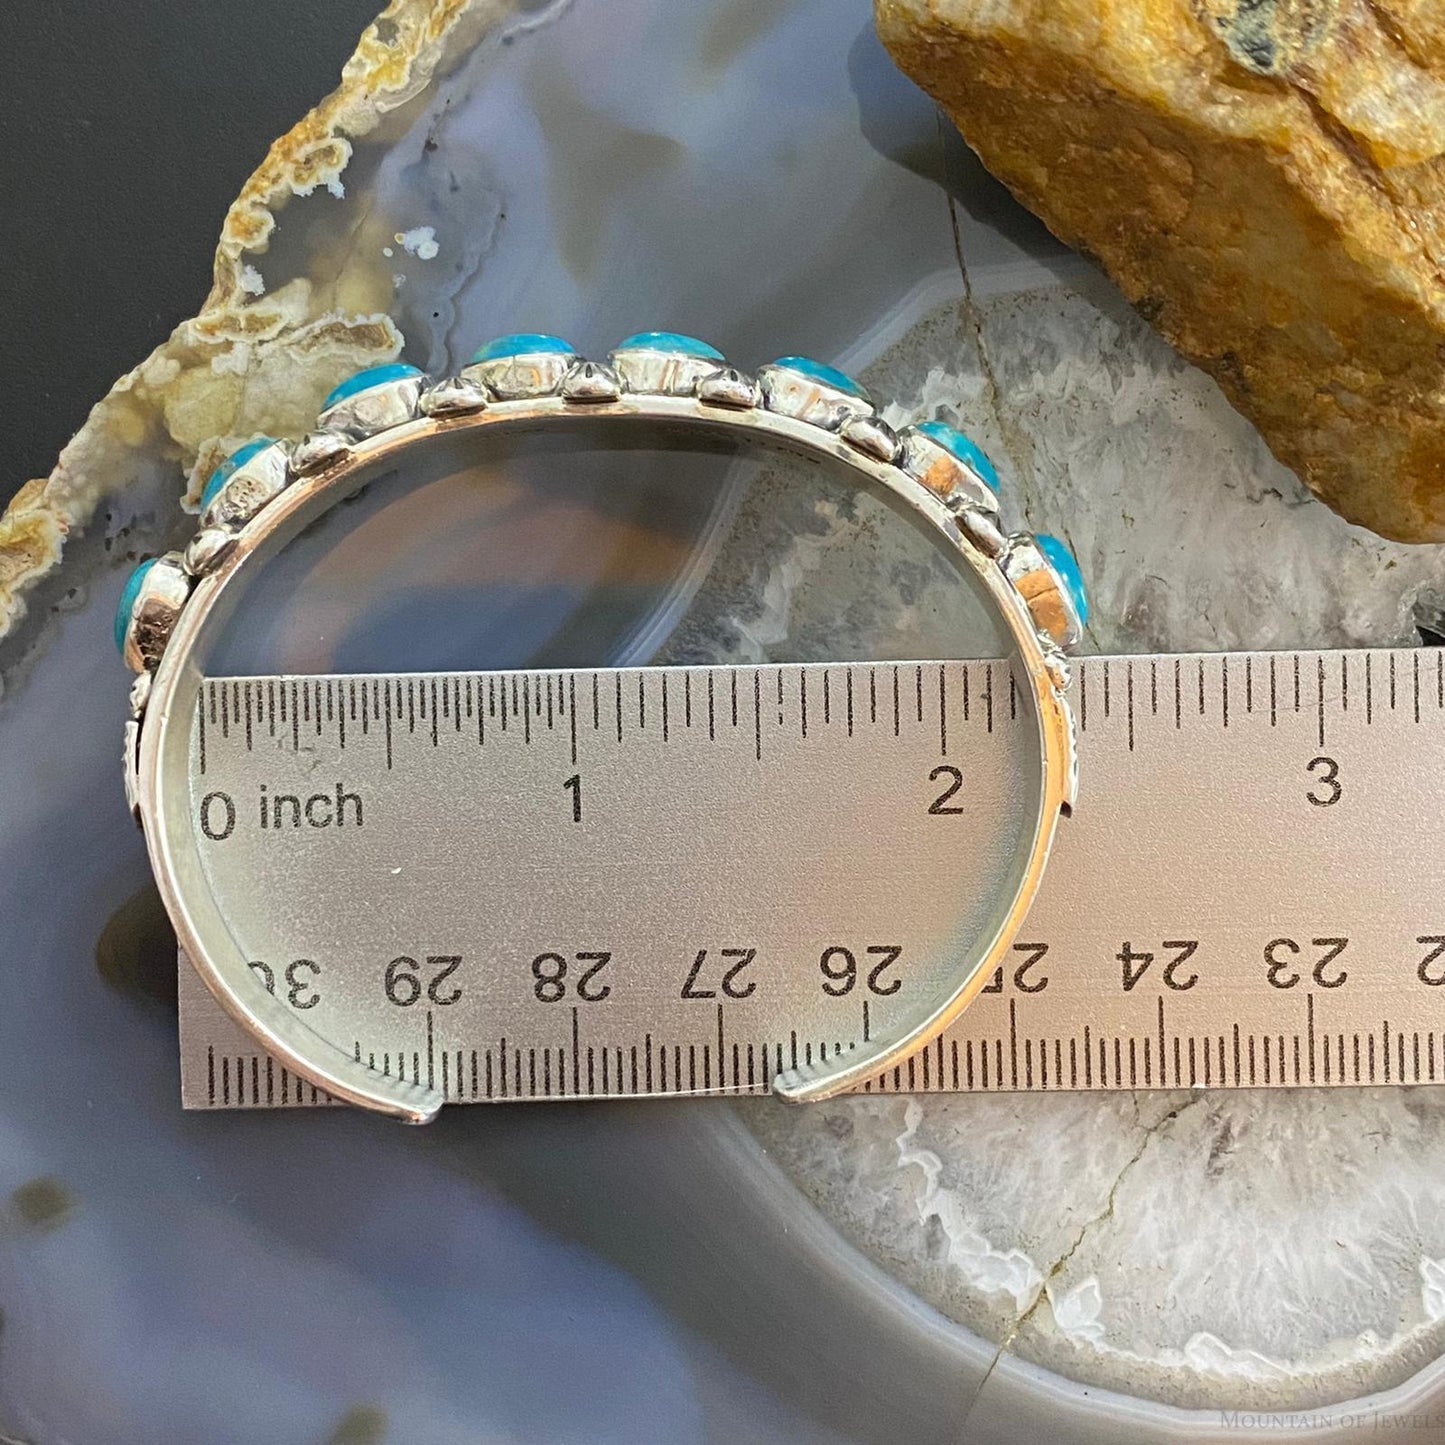 Paul Livingston Sterling Silver Silver Teardrop Turquoise Decorated Bracelet